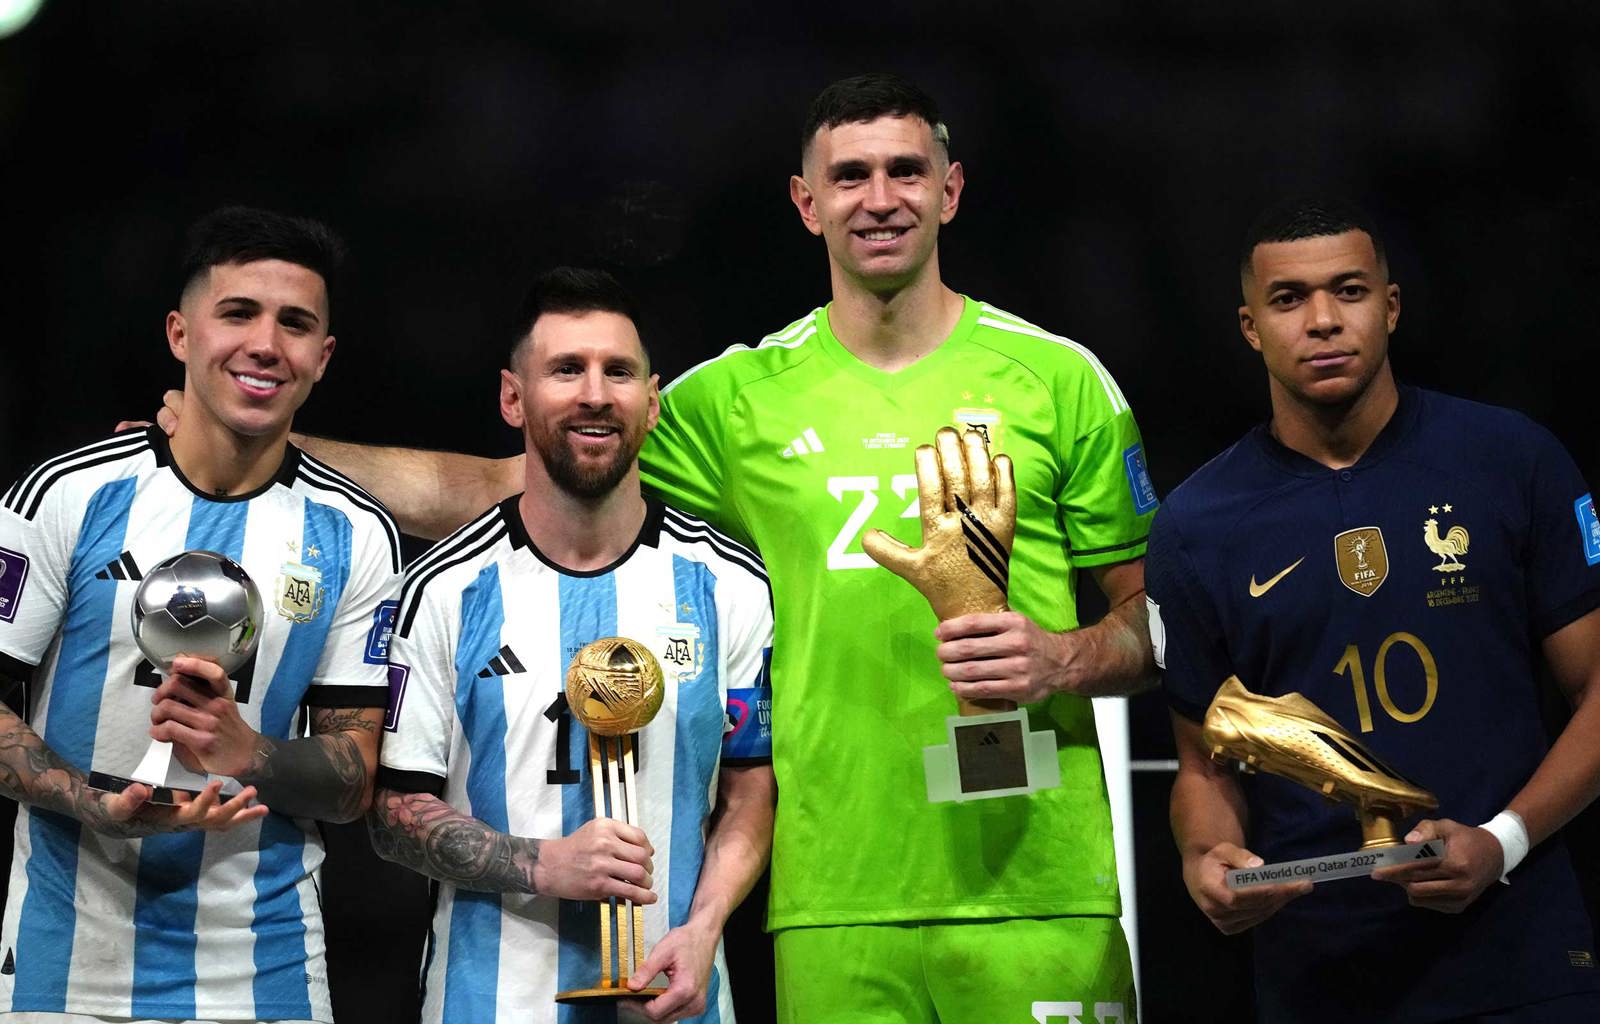 FIFA WORLD CUP QATAR 2022 Champions “Argentina” 🏆 Who's winning